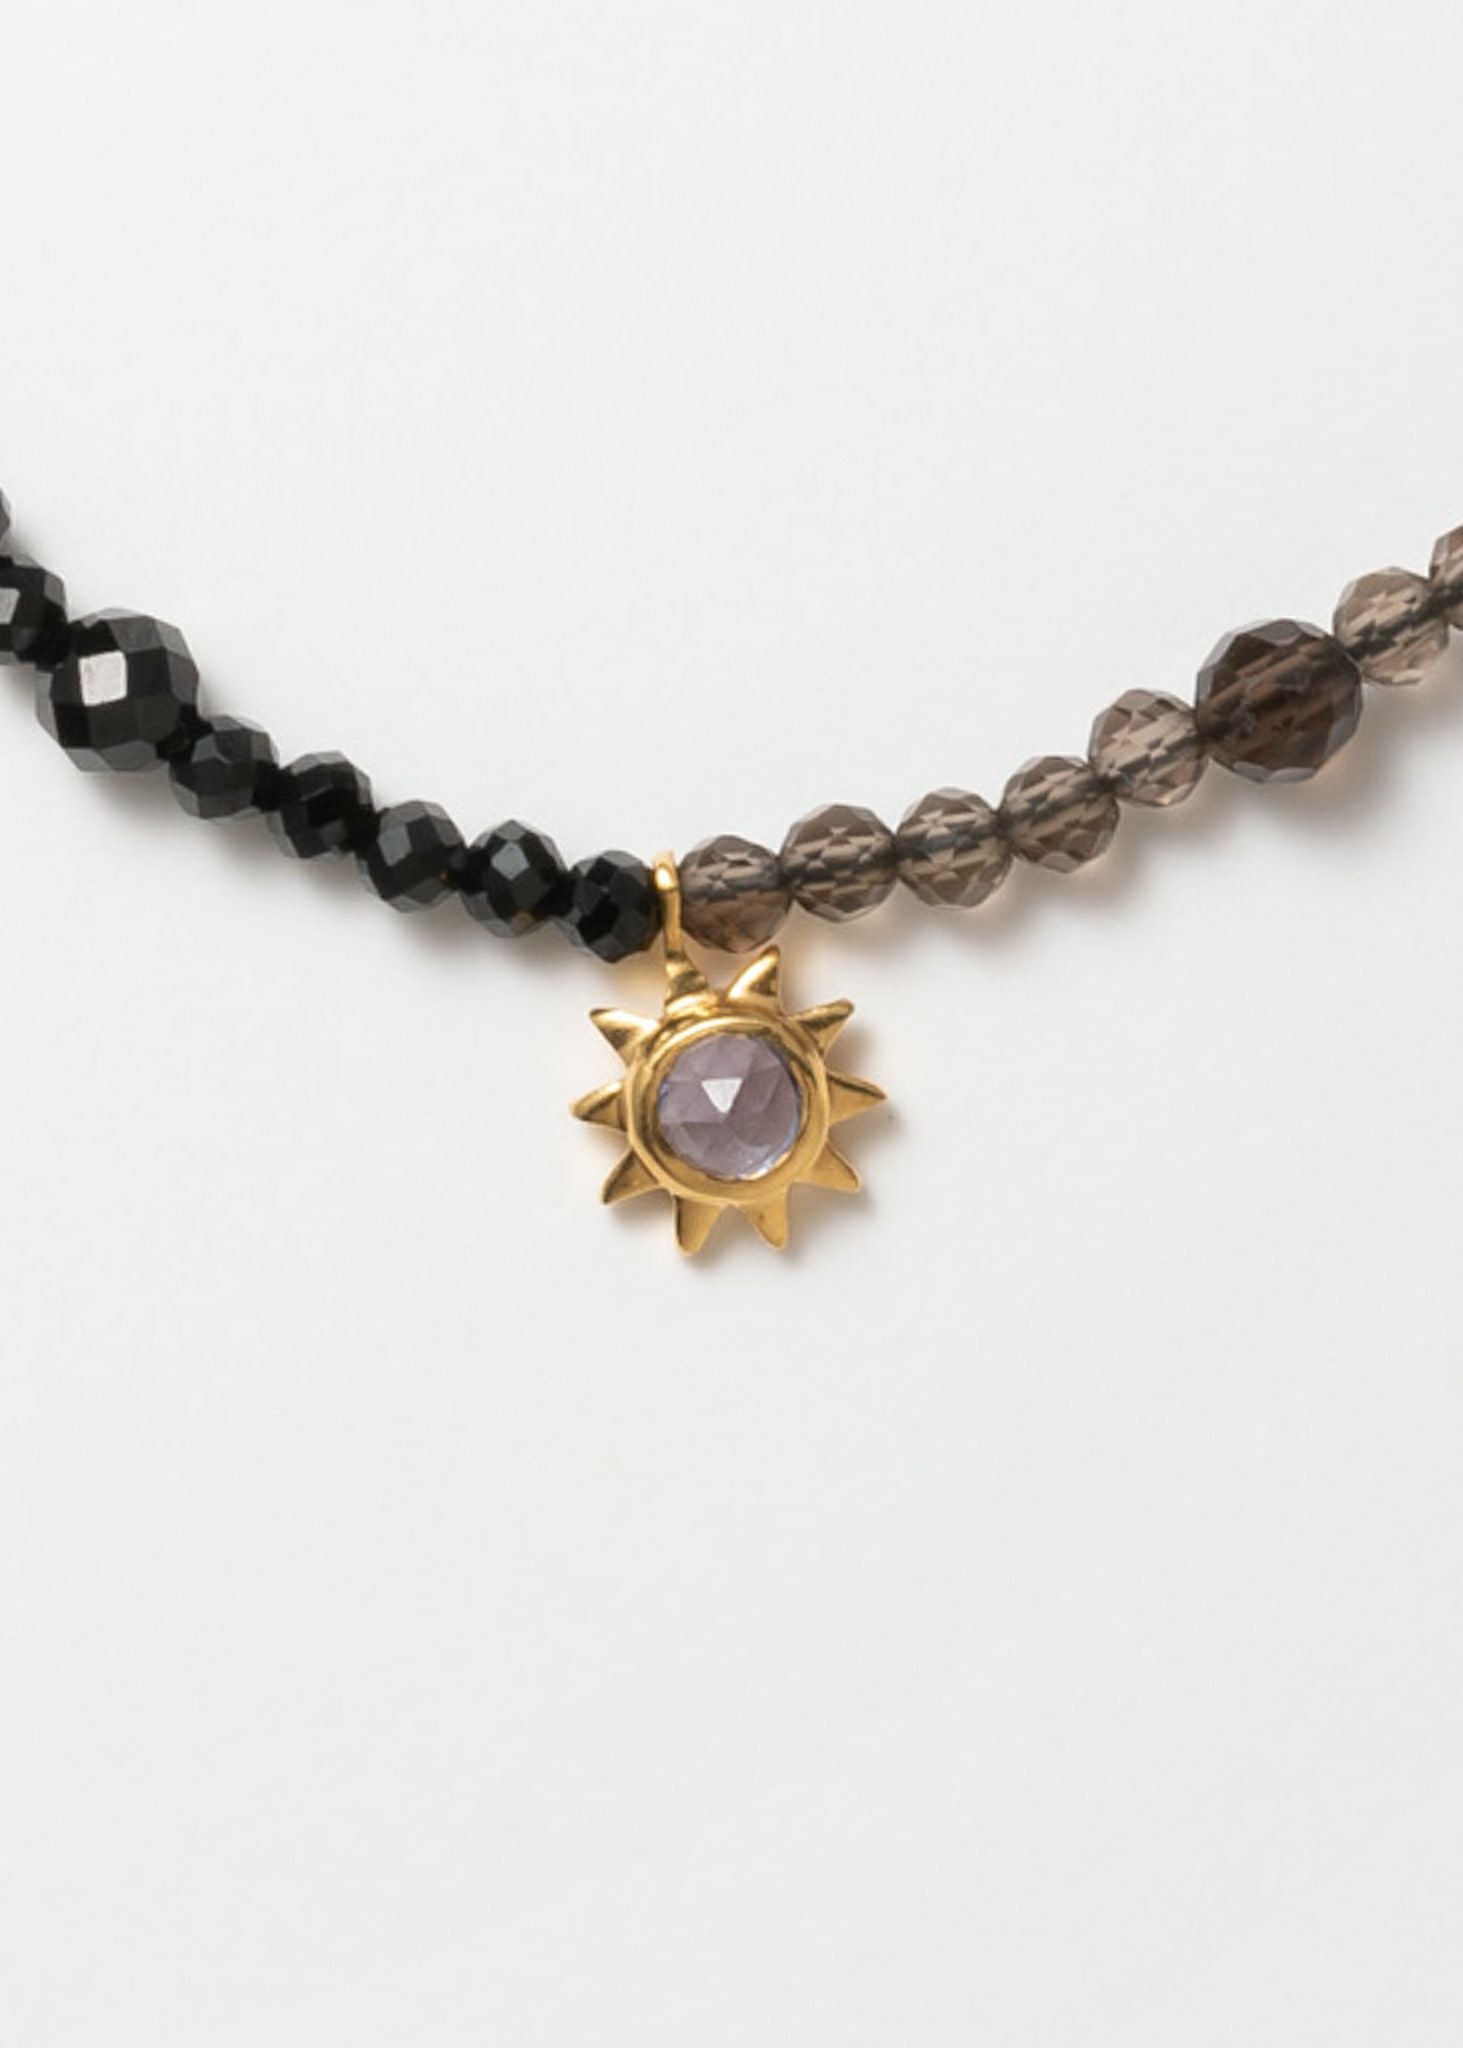 '- Capricorn - Beads Bracelet With Charm